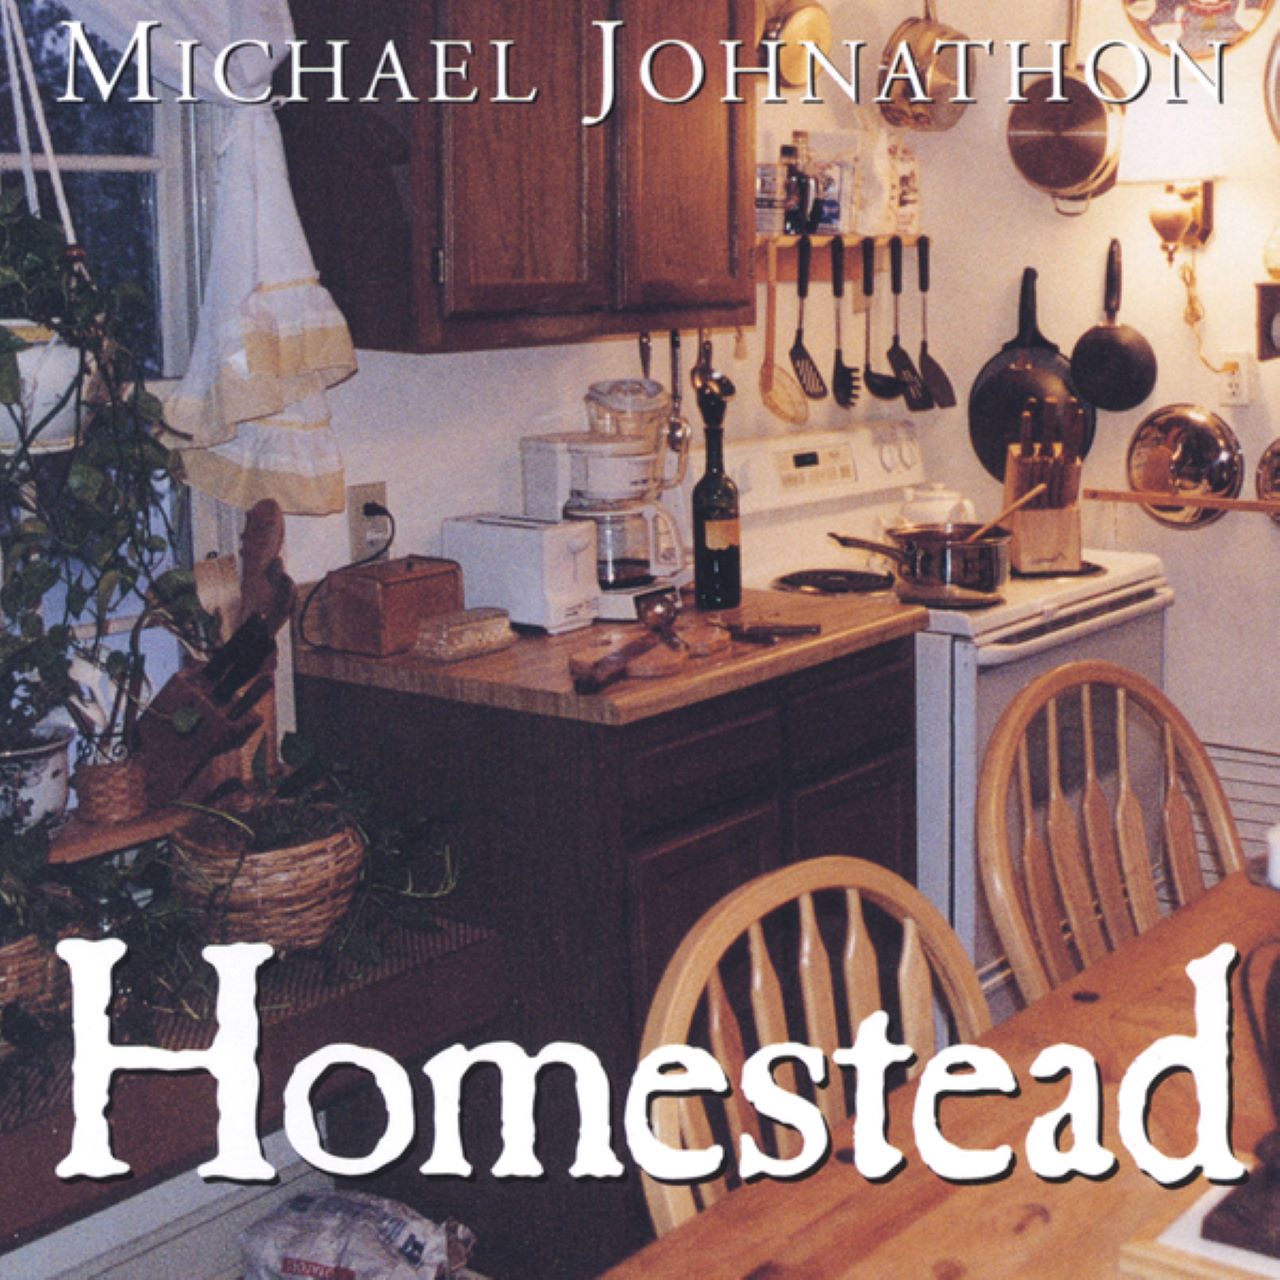 Michael Johnathon - Homestead cover album